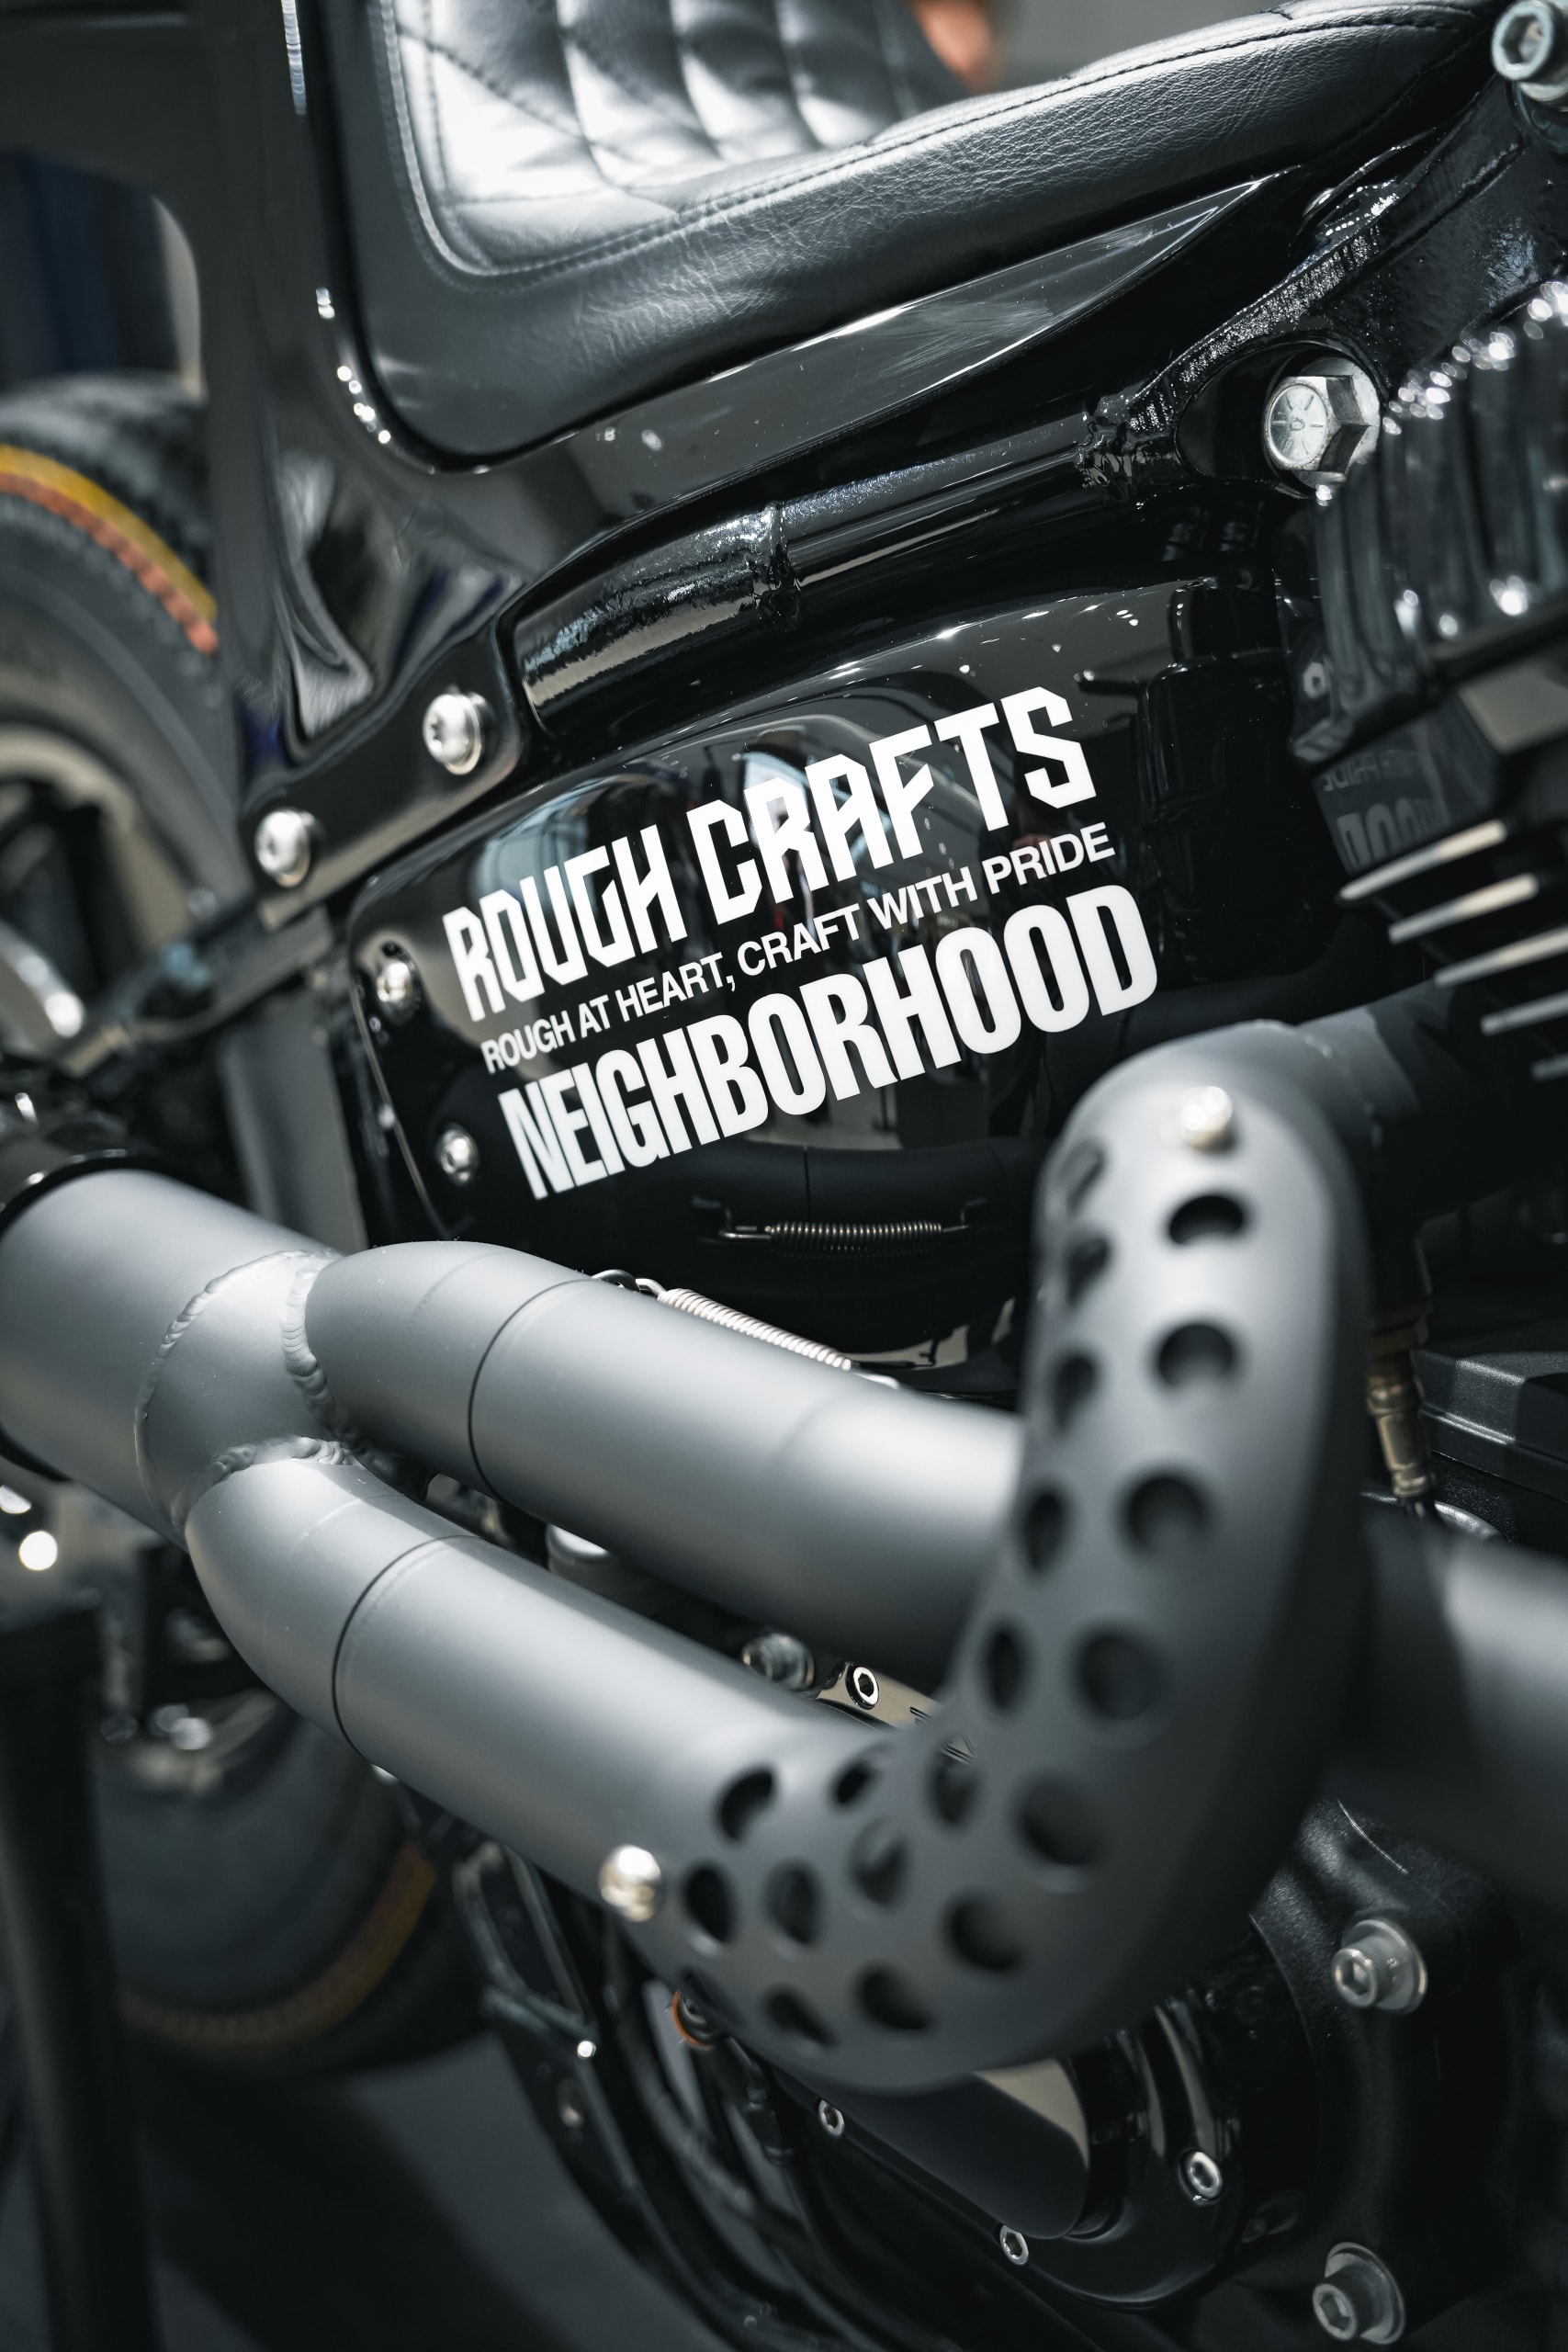 NEIGHBORHOOD 攜手台灣重機改裝單位 Rough Crafts 全新聯名系列正式登場